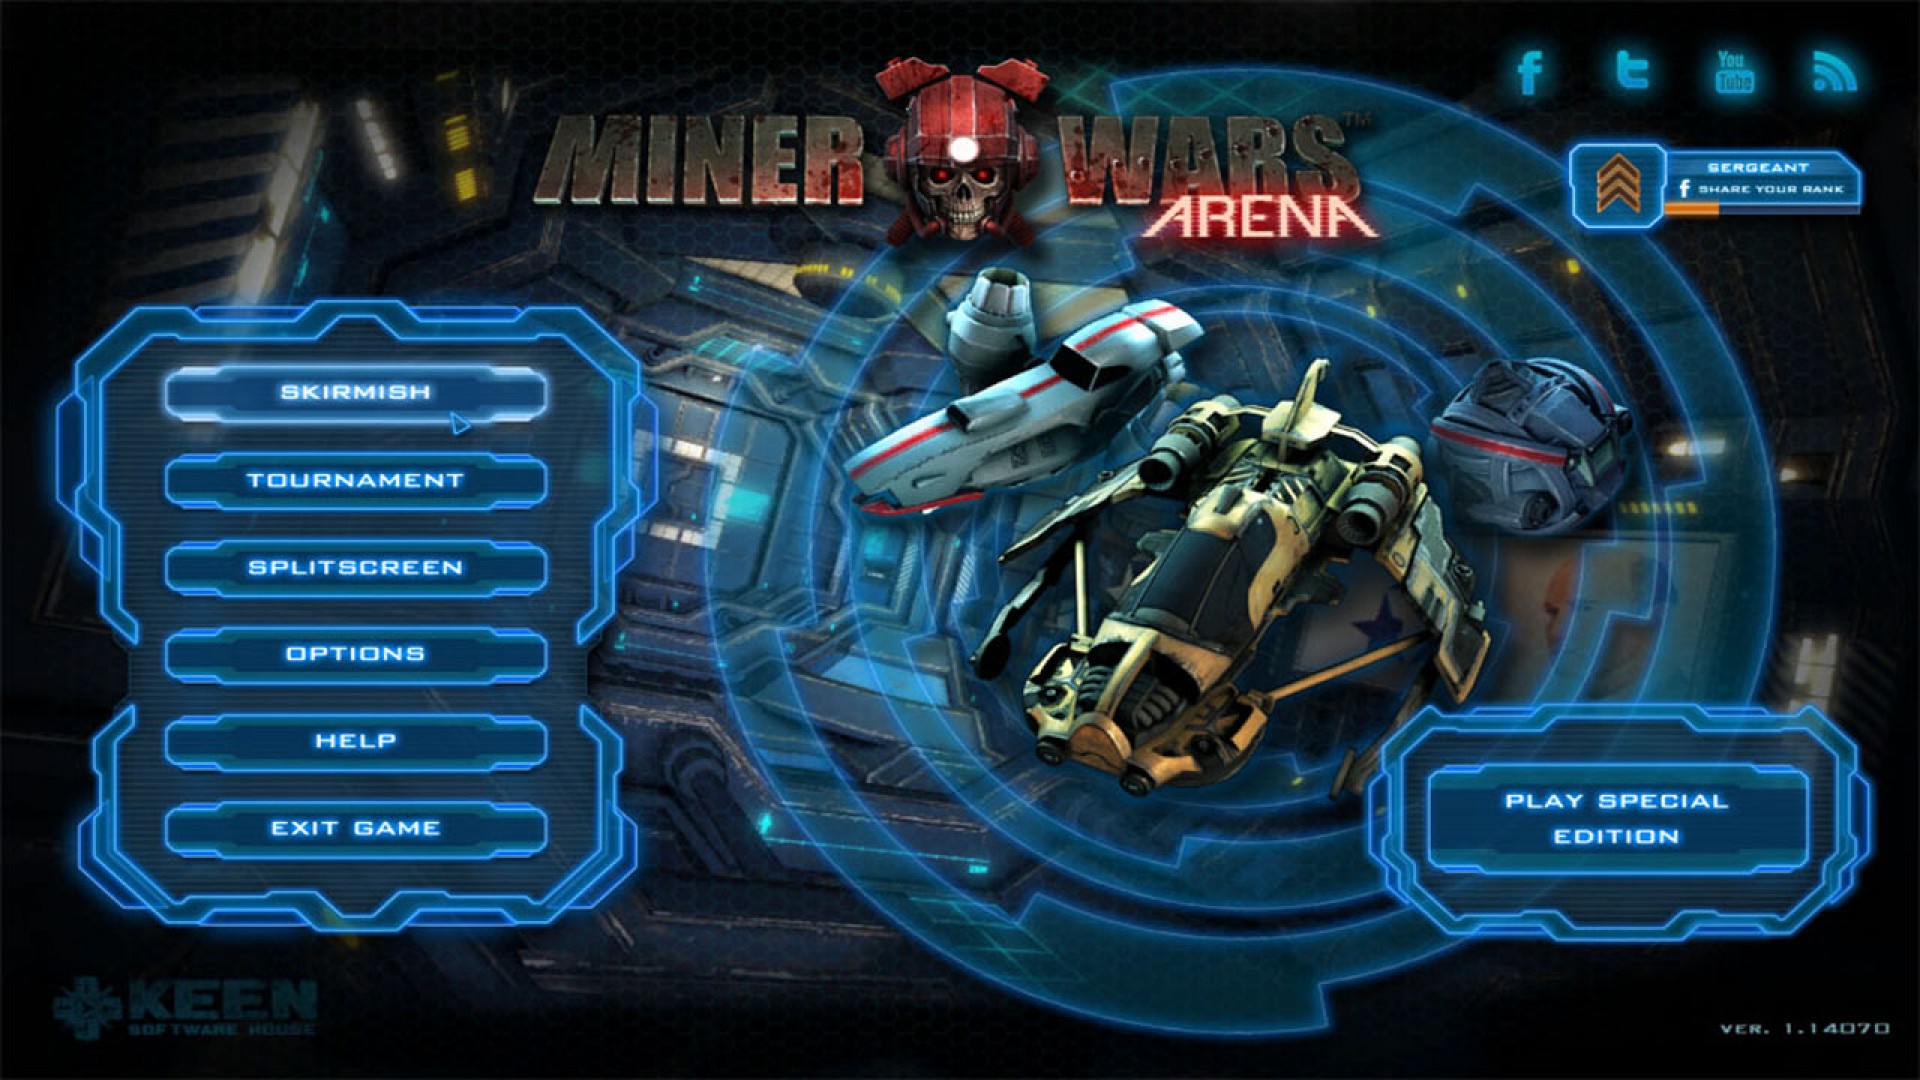 Miner Wars Arena screenshot